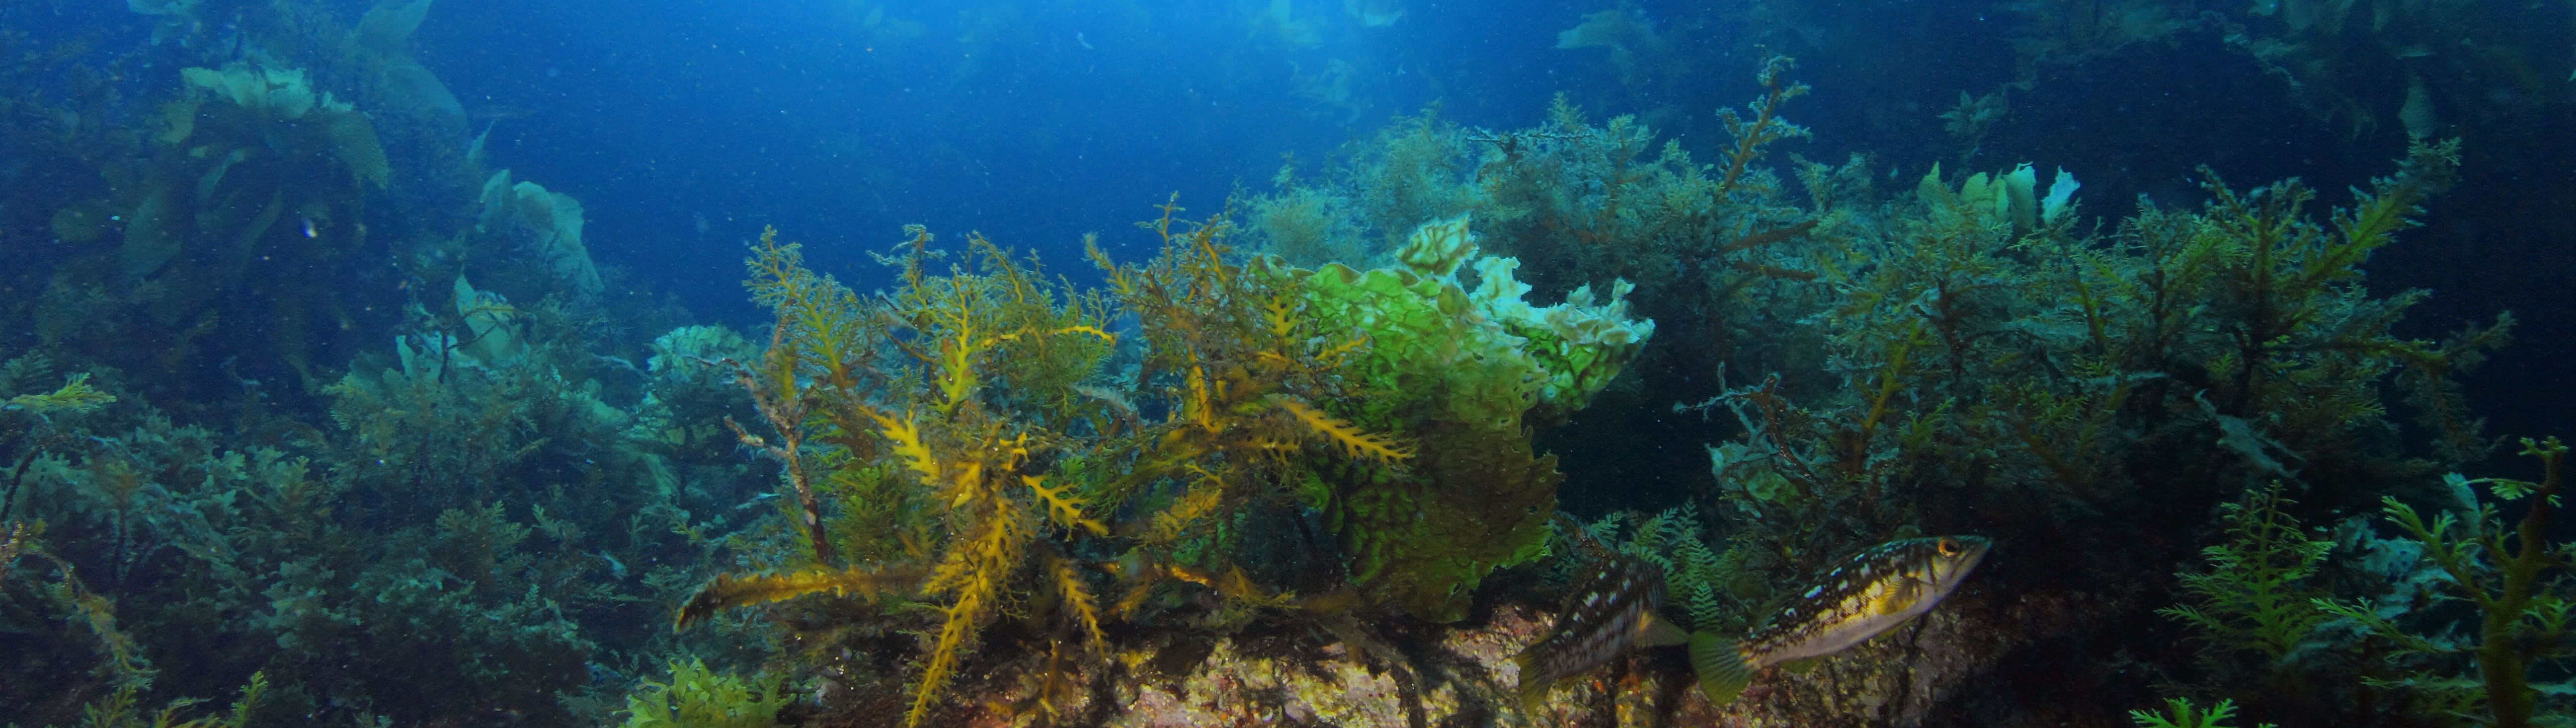  Reef near Catalina Island.